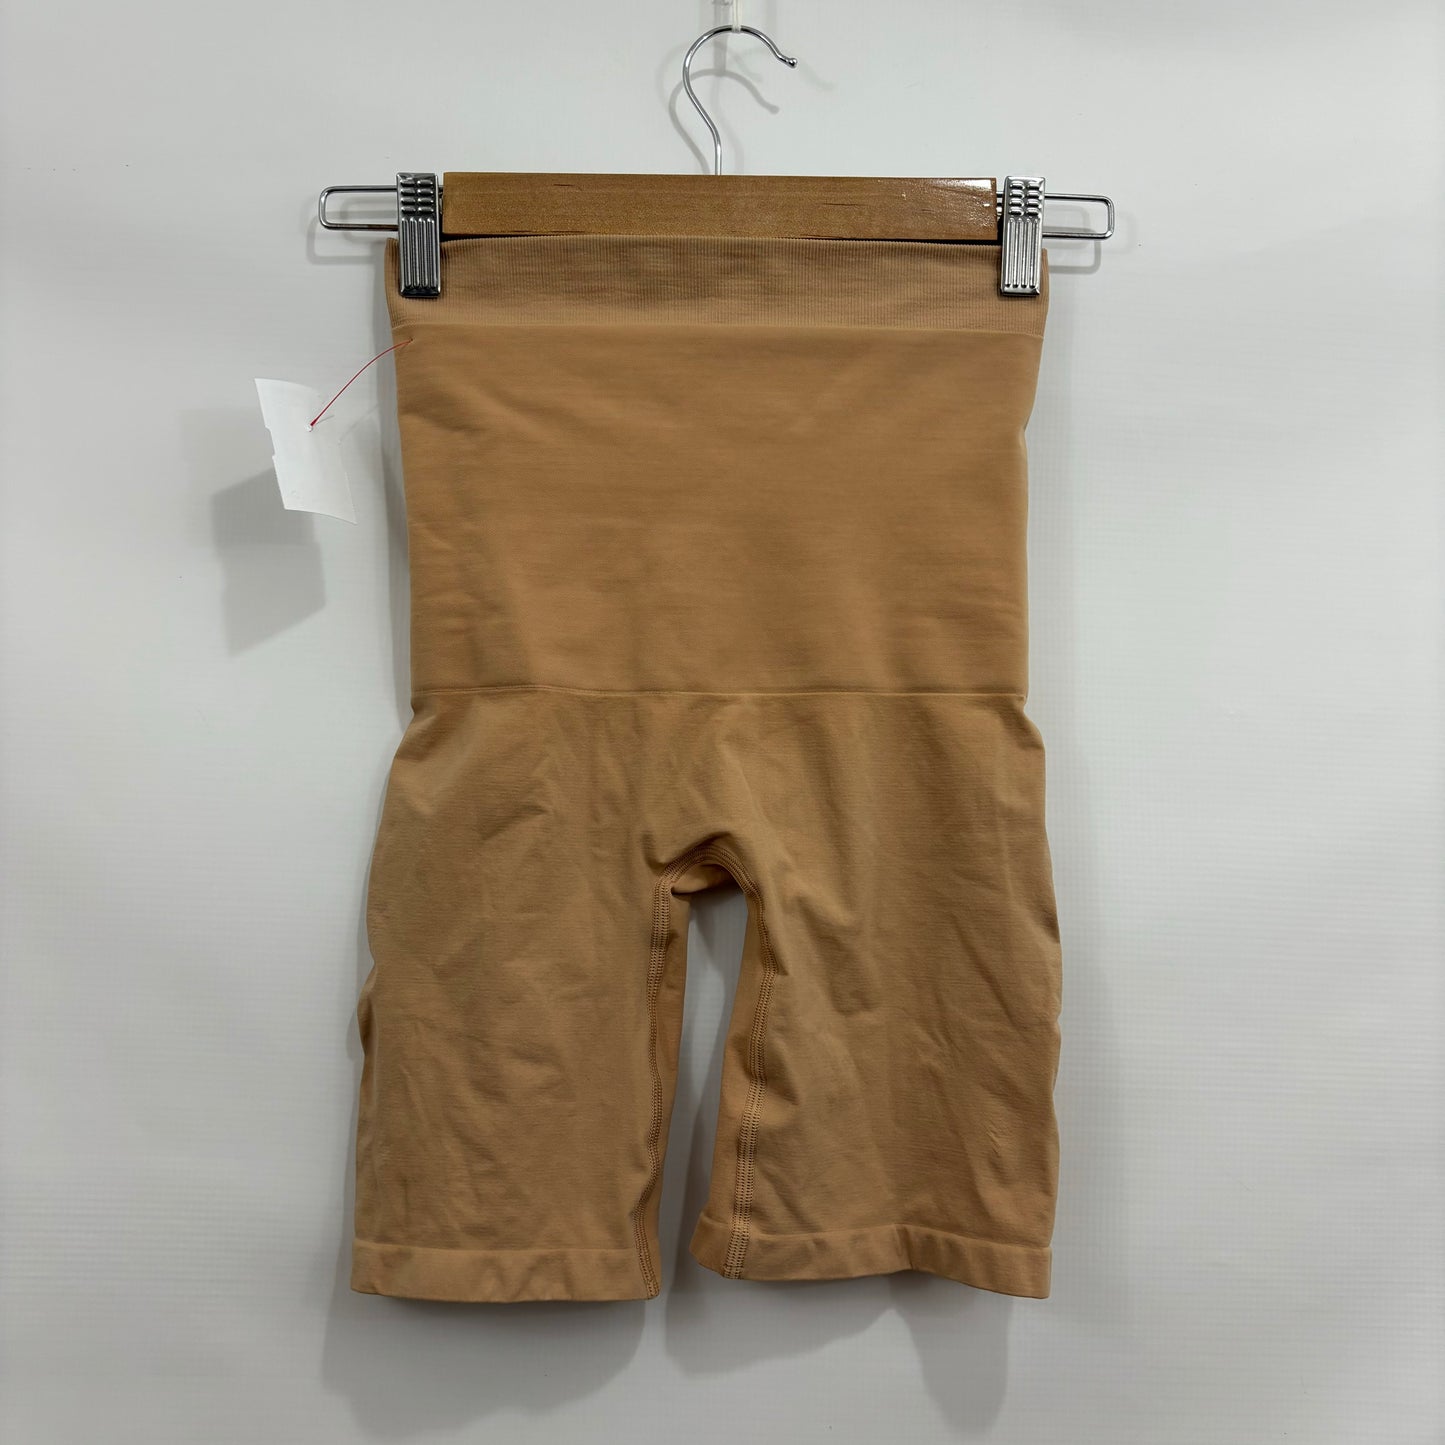 Shorts By Skims Size: 4x